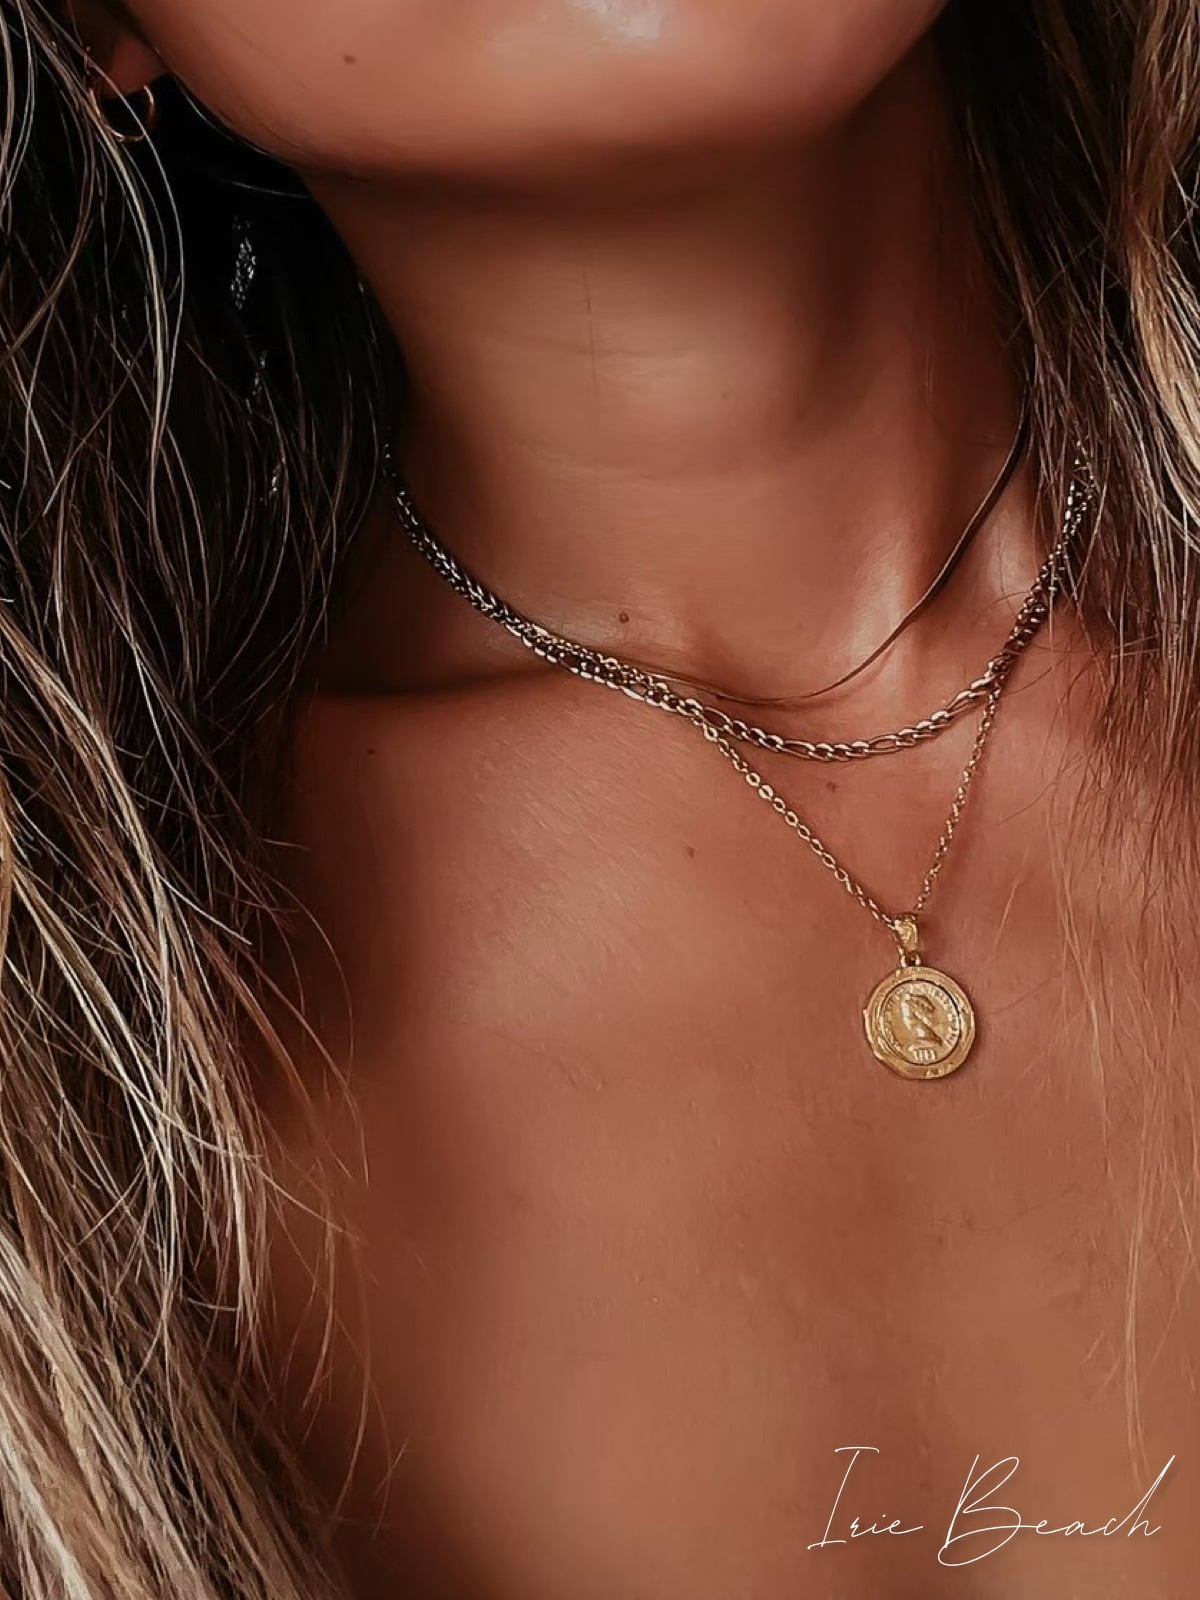 Irie coin necklace | IRIEBEACH